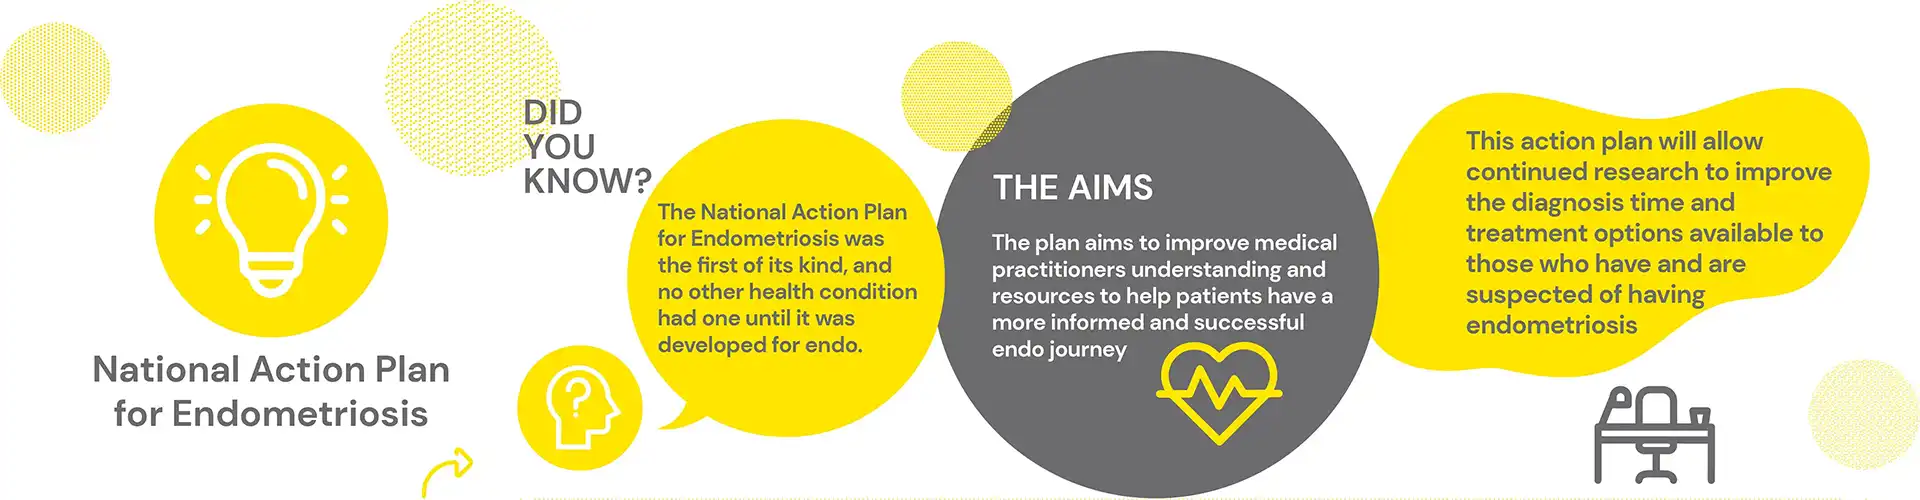 National Action Plan for Endometriosis Image